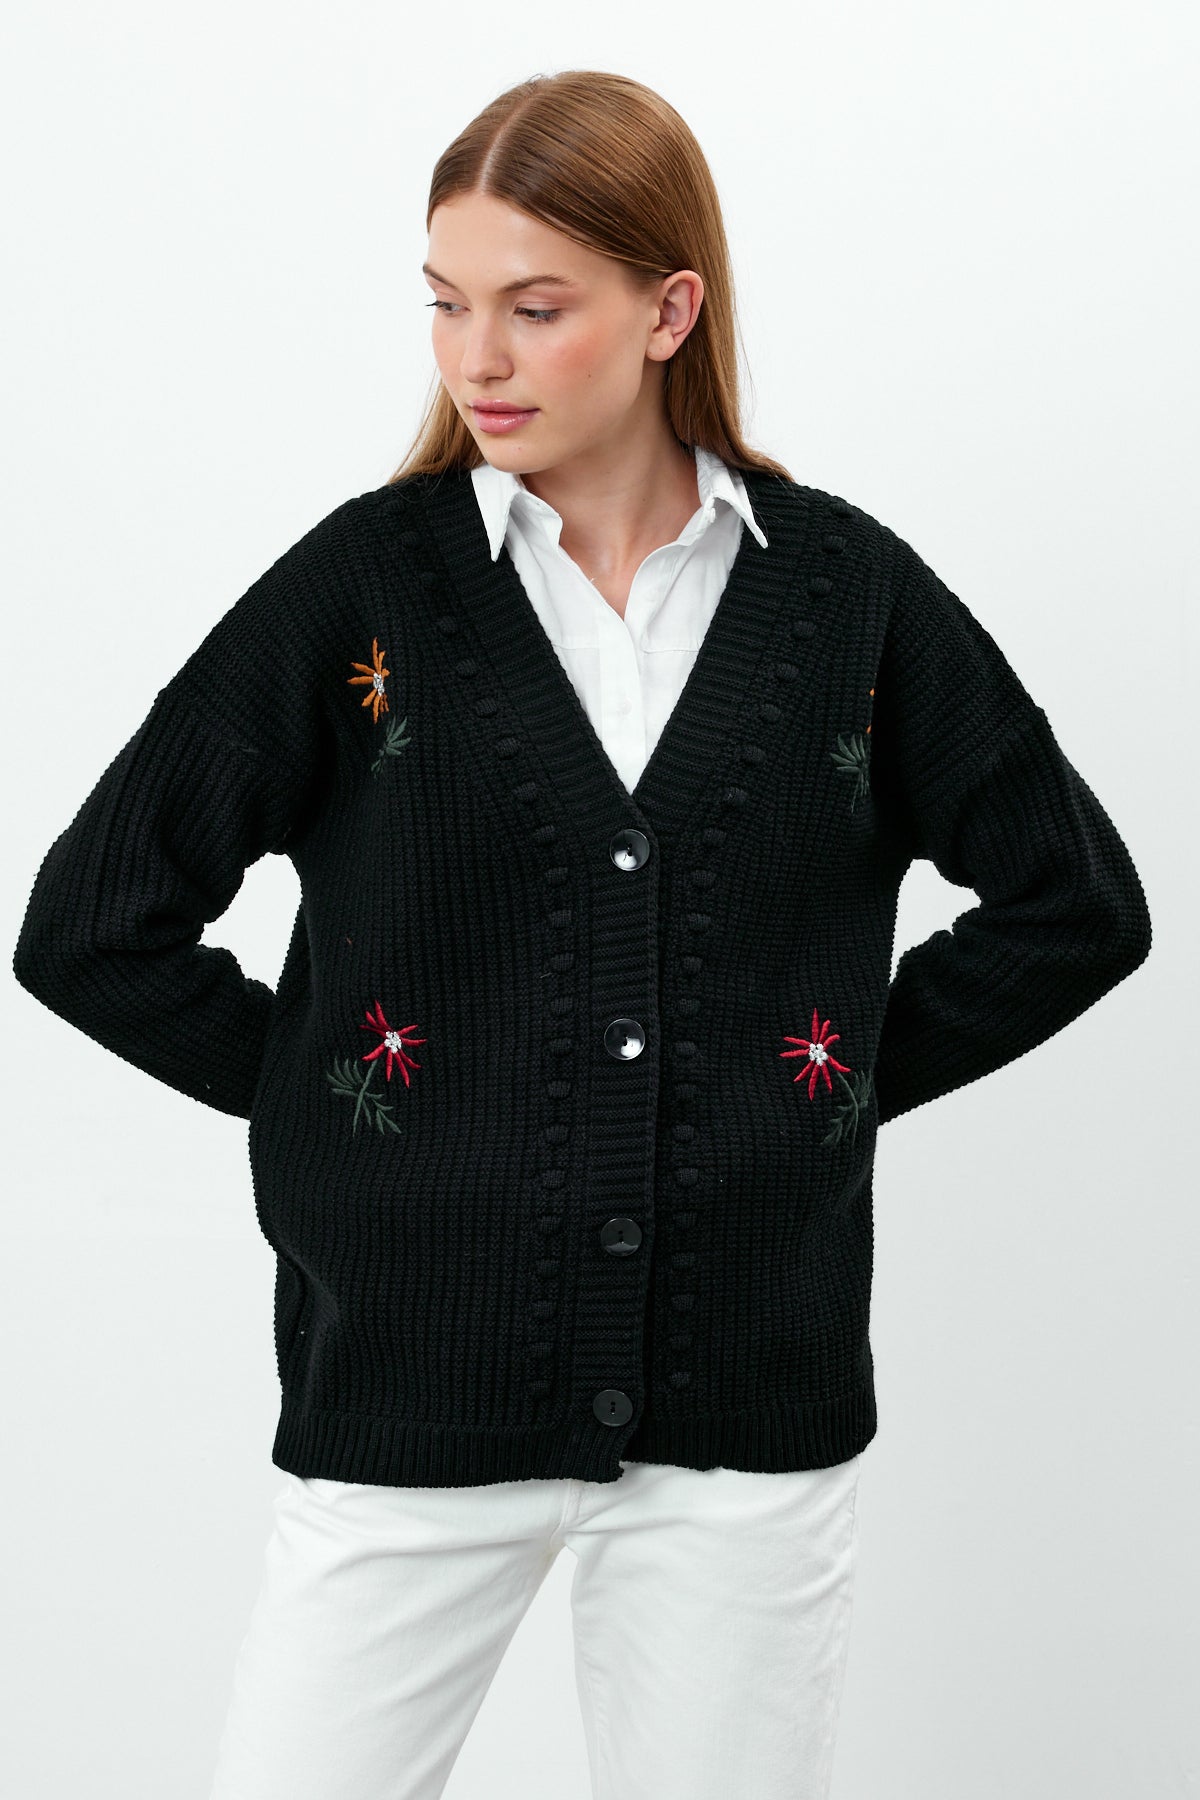 Flower Knitted Knit Cardigan Mid Length Knit Cardigan- SKU: 3810